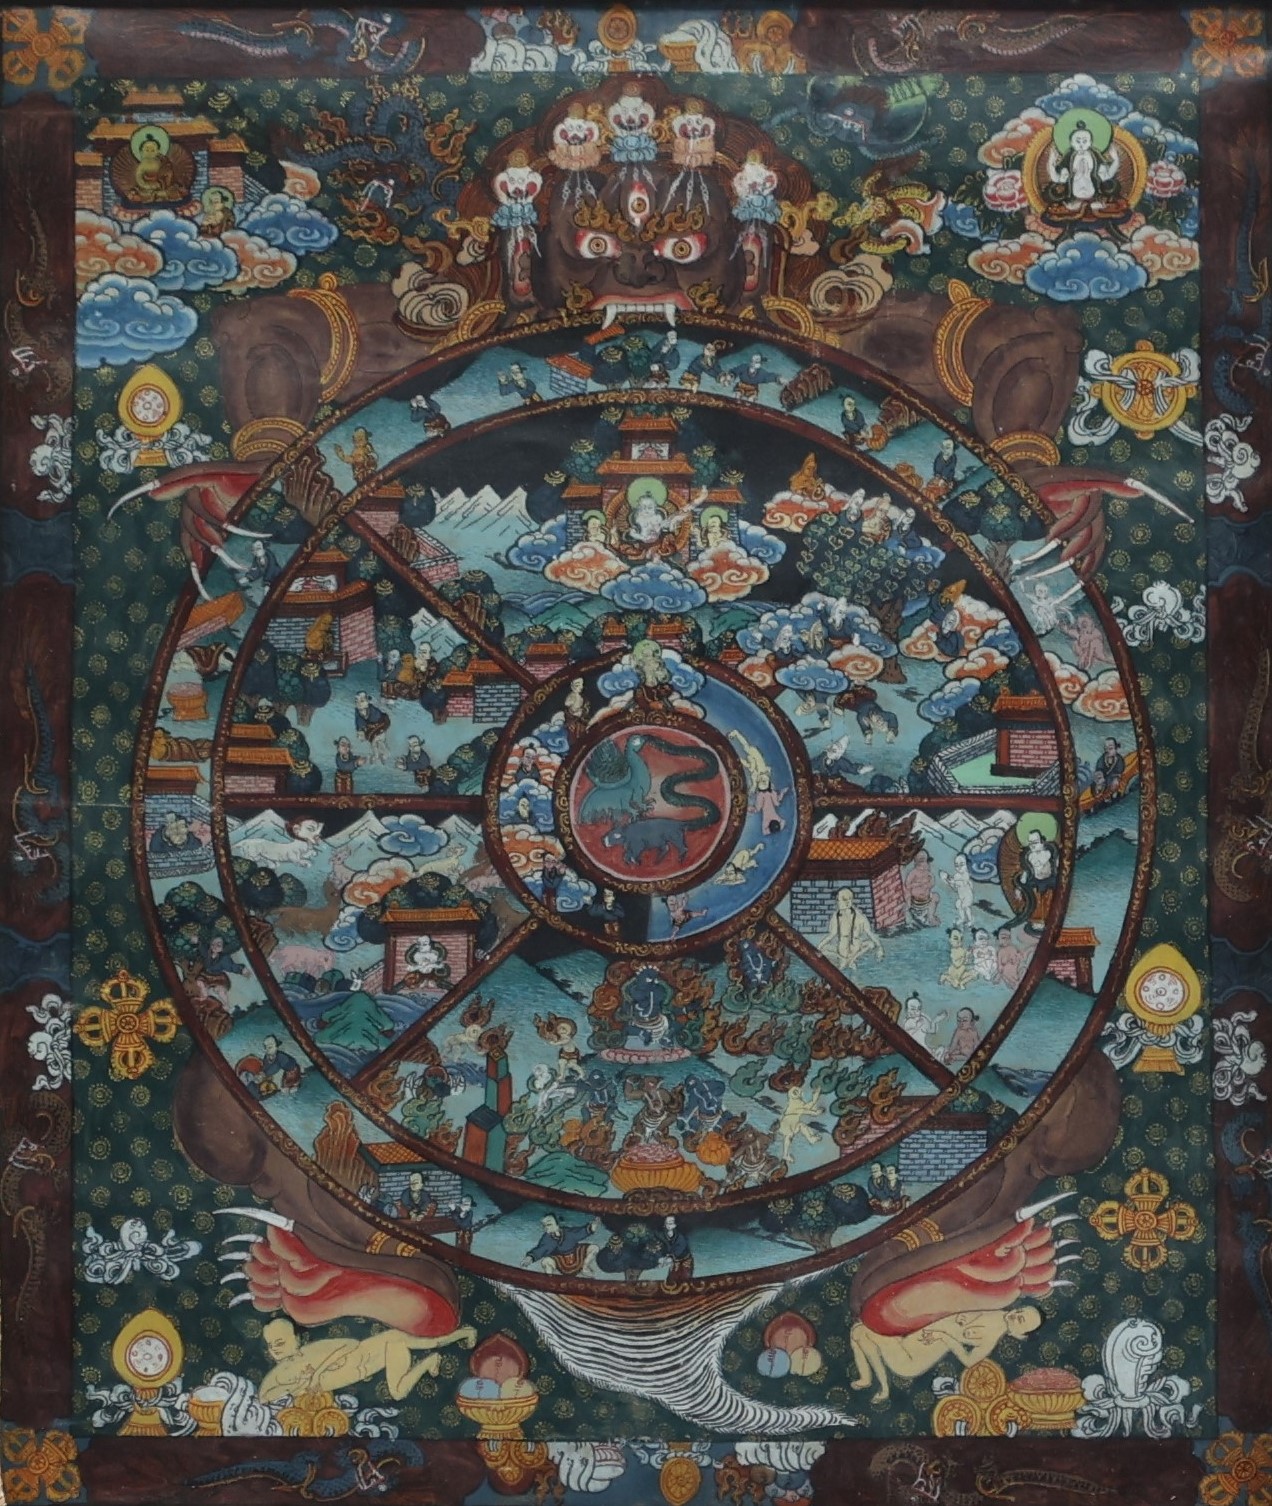 Tibet - Tanka painted on canvas, late 19th century.